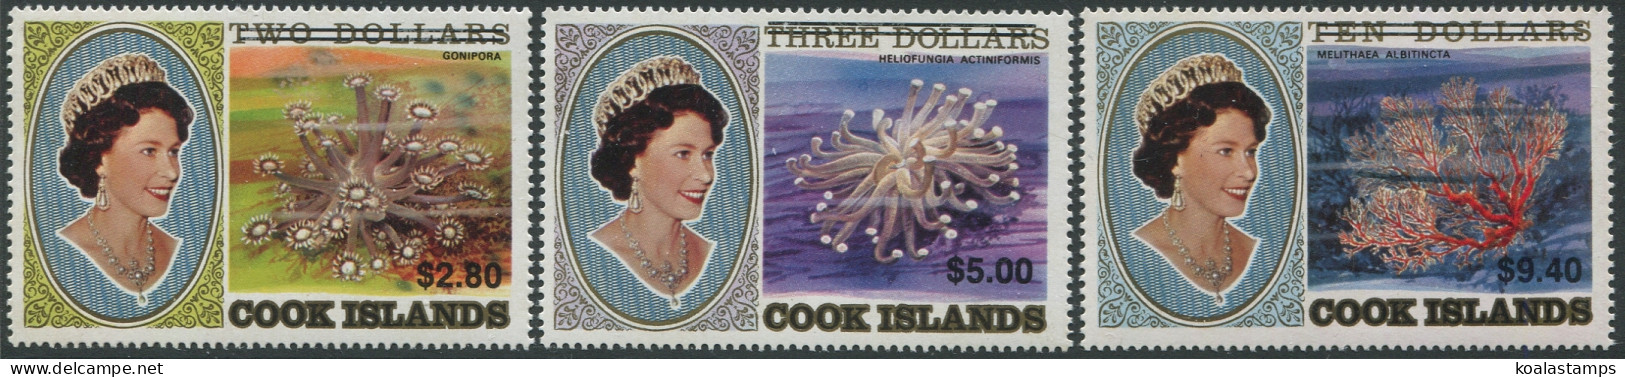 Cook Islands 1987 SG1150-1152 Corals High Values Ovpts Set MNH - Cookinseln